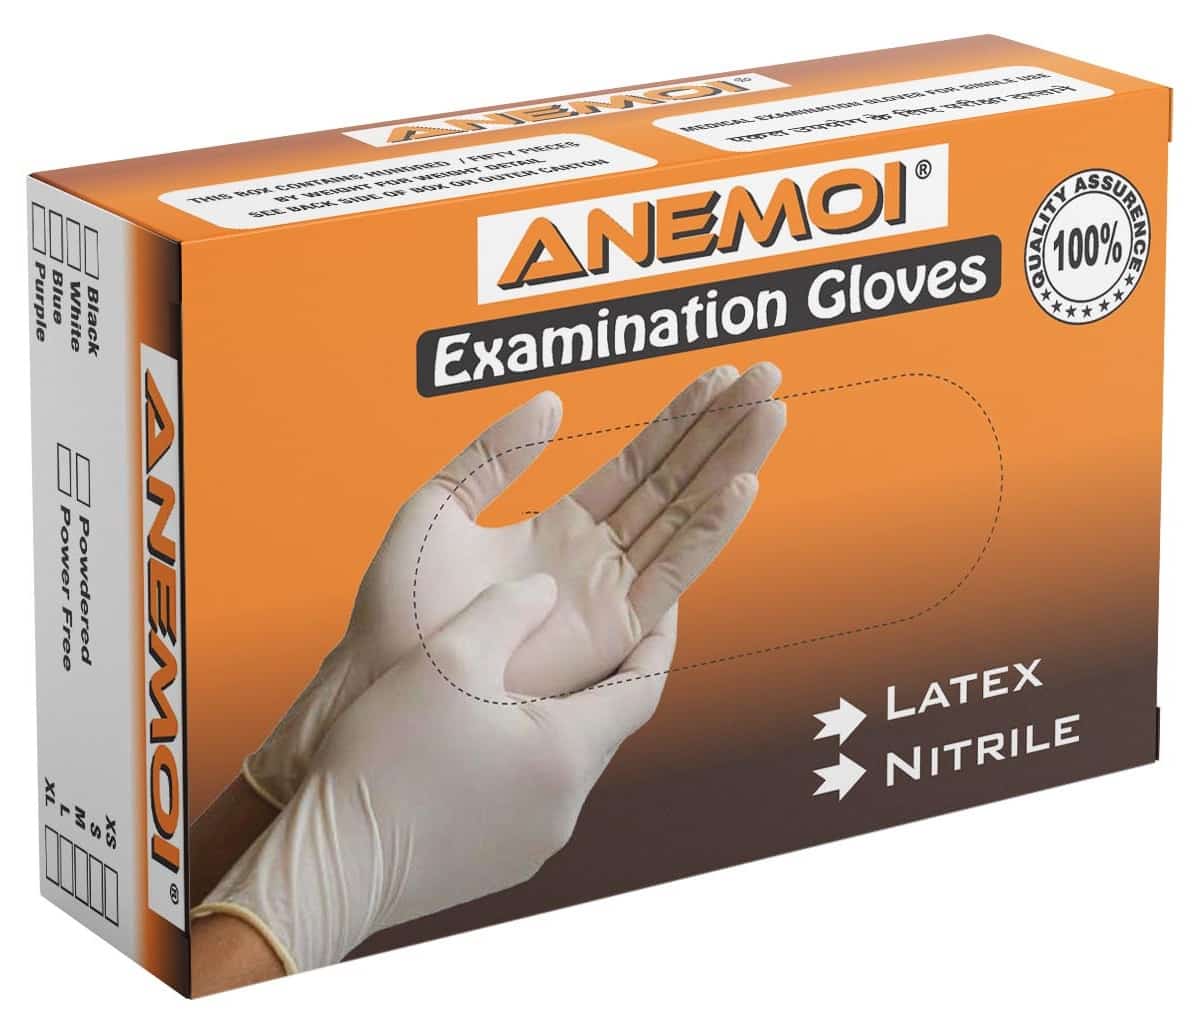 Latex Medical Examination Disposable Hand Gloves, White, 50 Pcs Per Box (Medium)